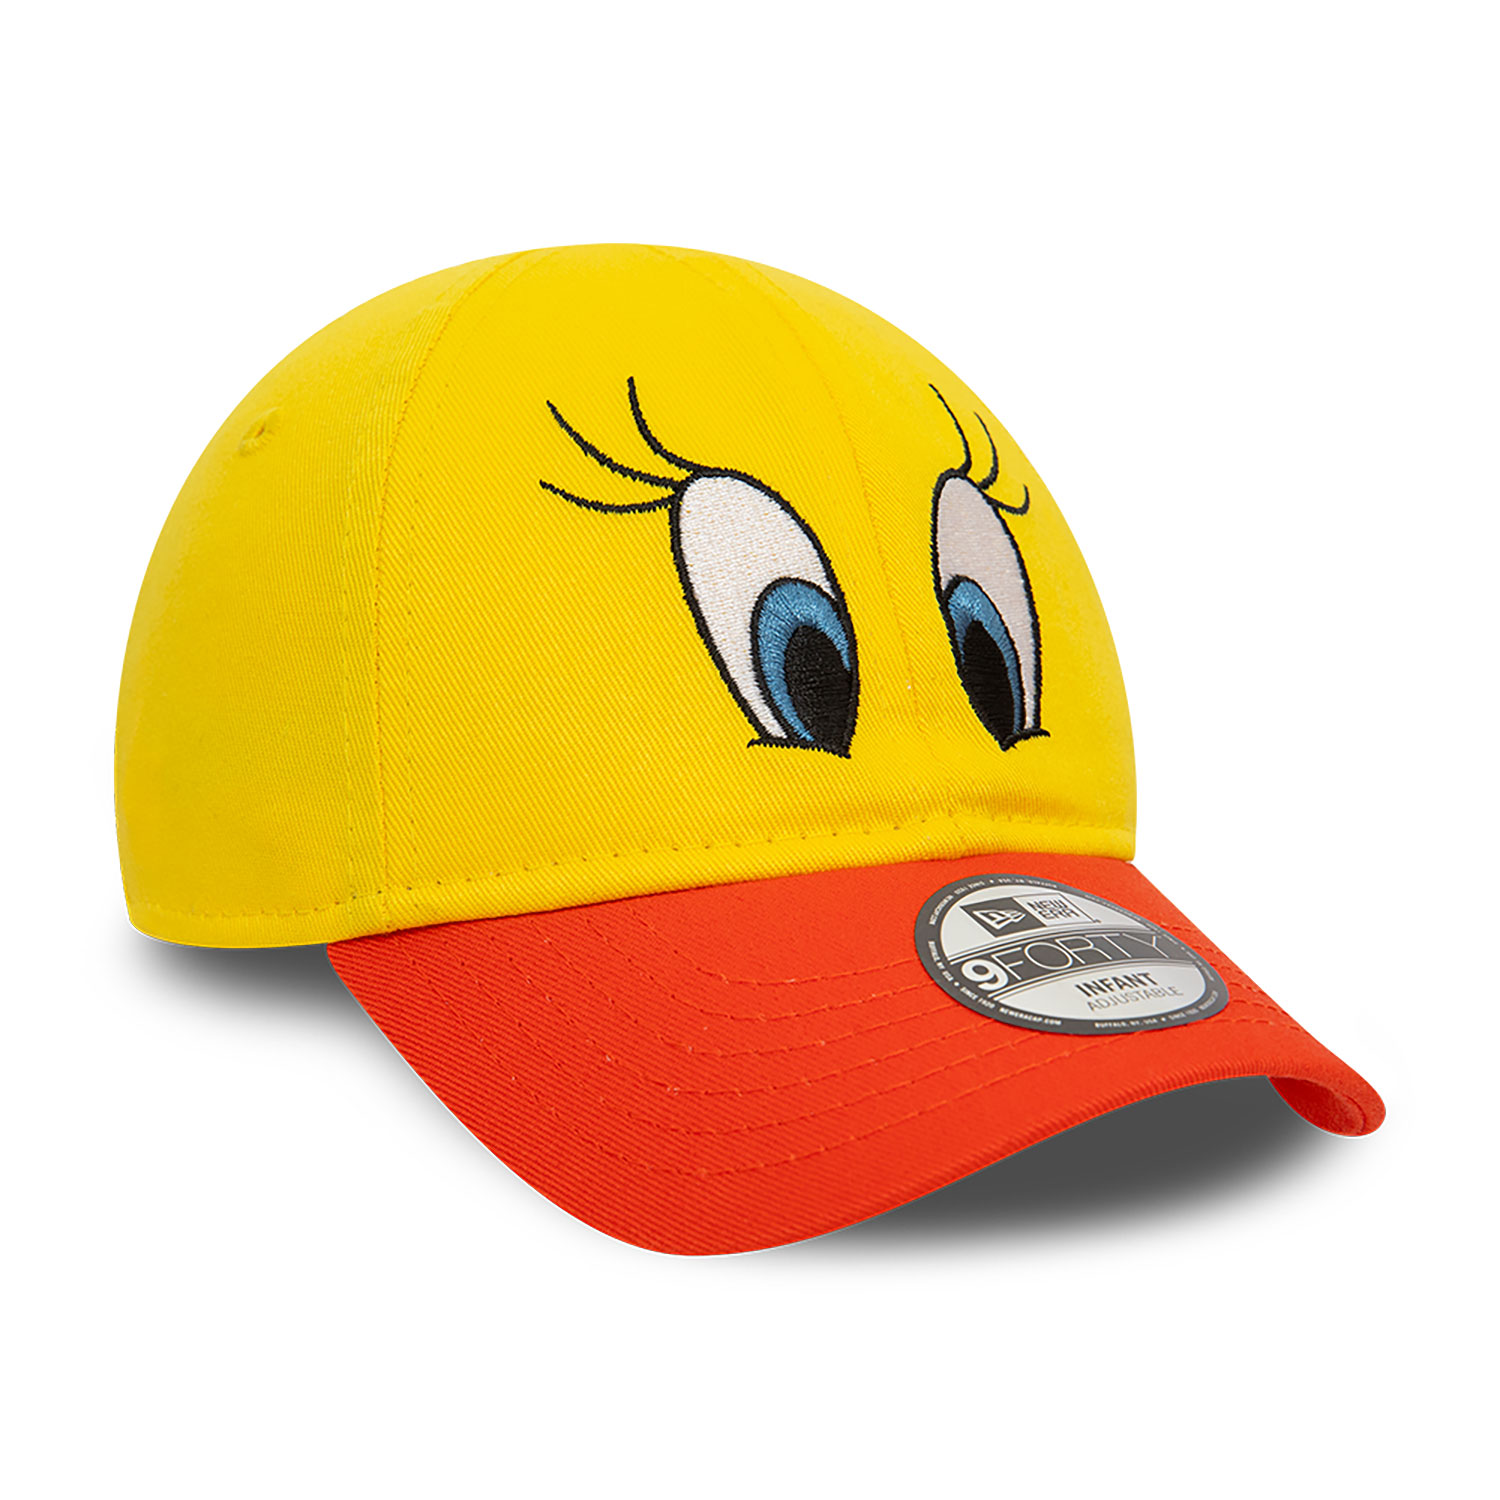 Tweety Bird Looney Tunes Infant Yellow 9FORTY Adjustable Cap